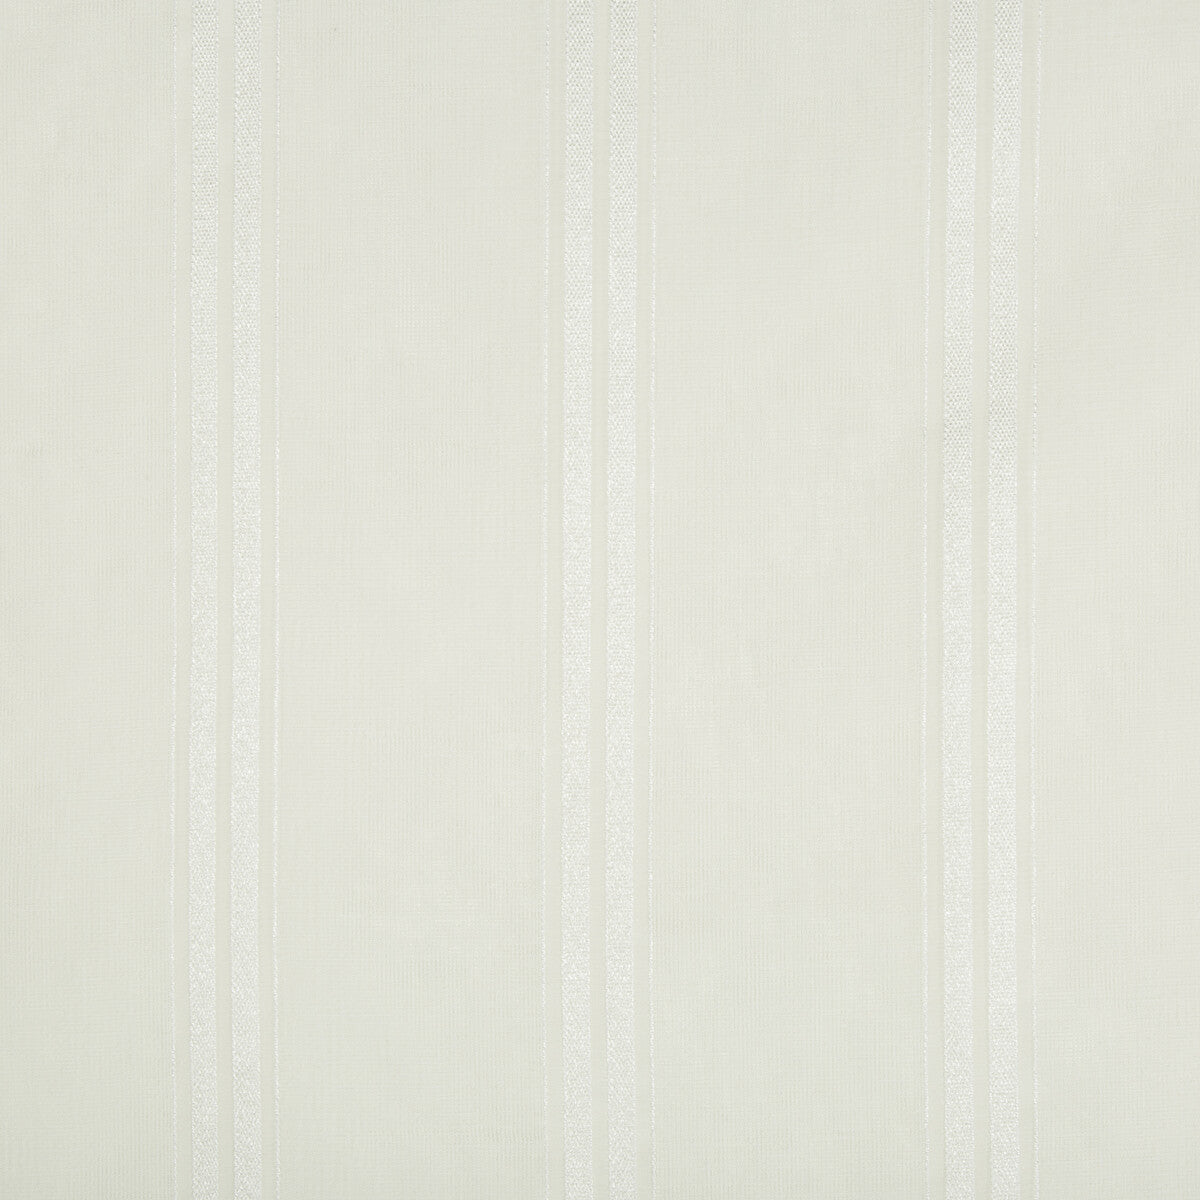 Kravet Basics fabric in 4262-1 color - pattern 4262.1.0 - by Kravet Basics in the Gis collection